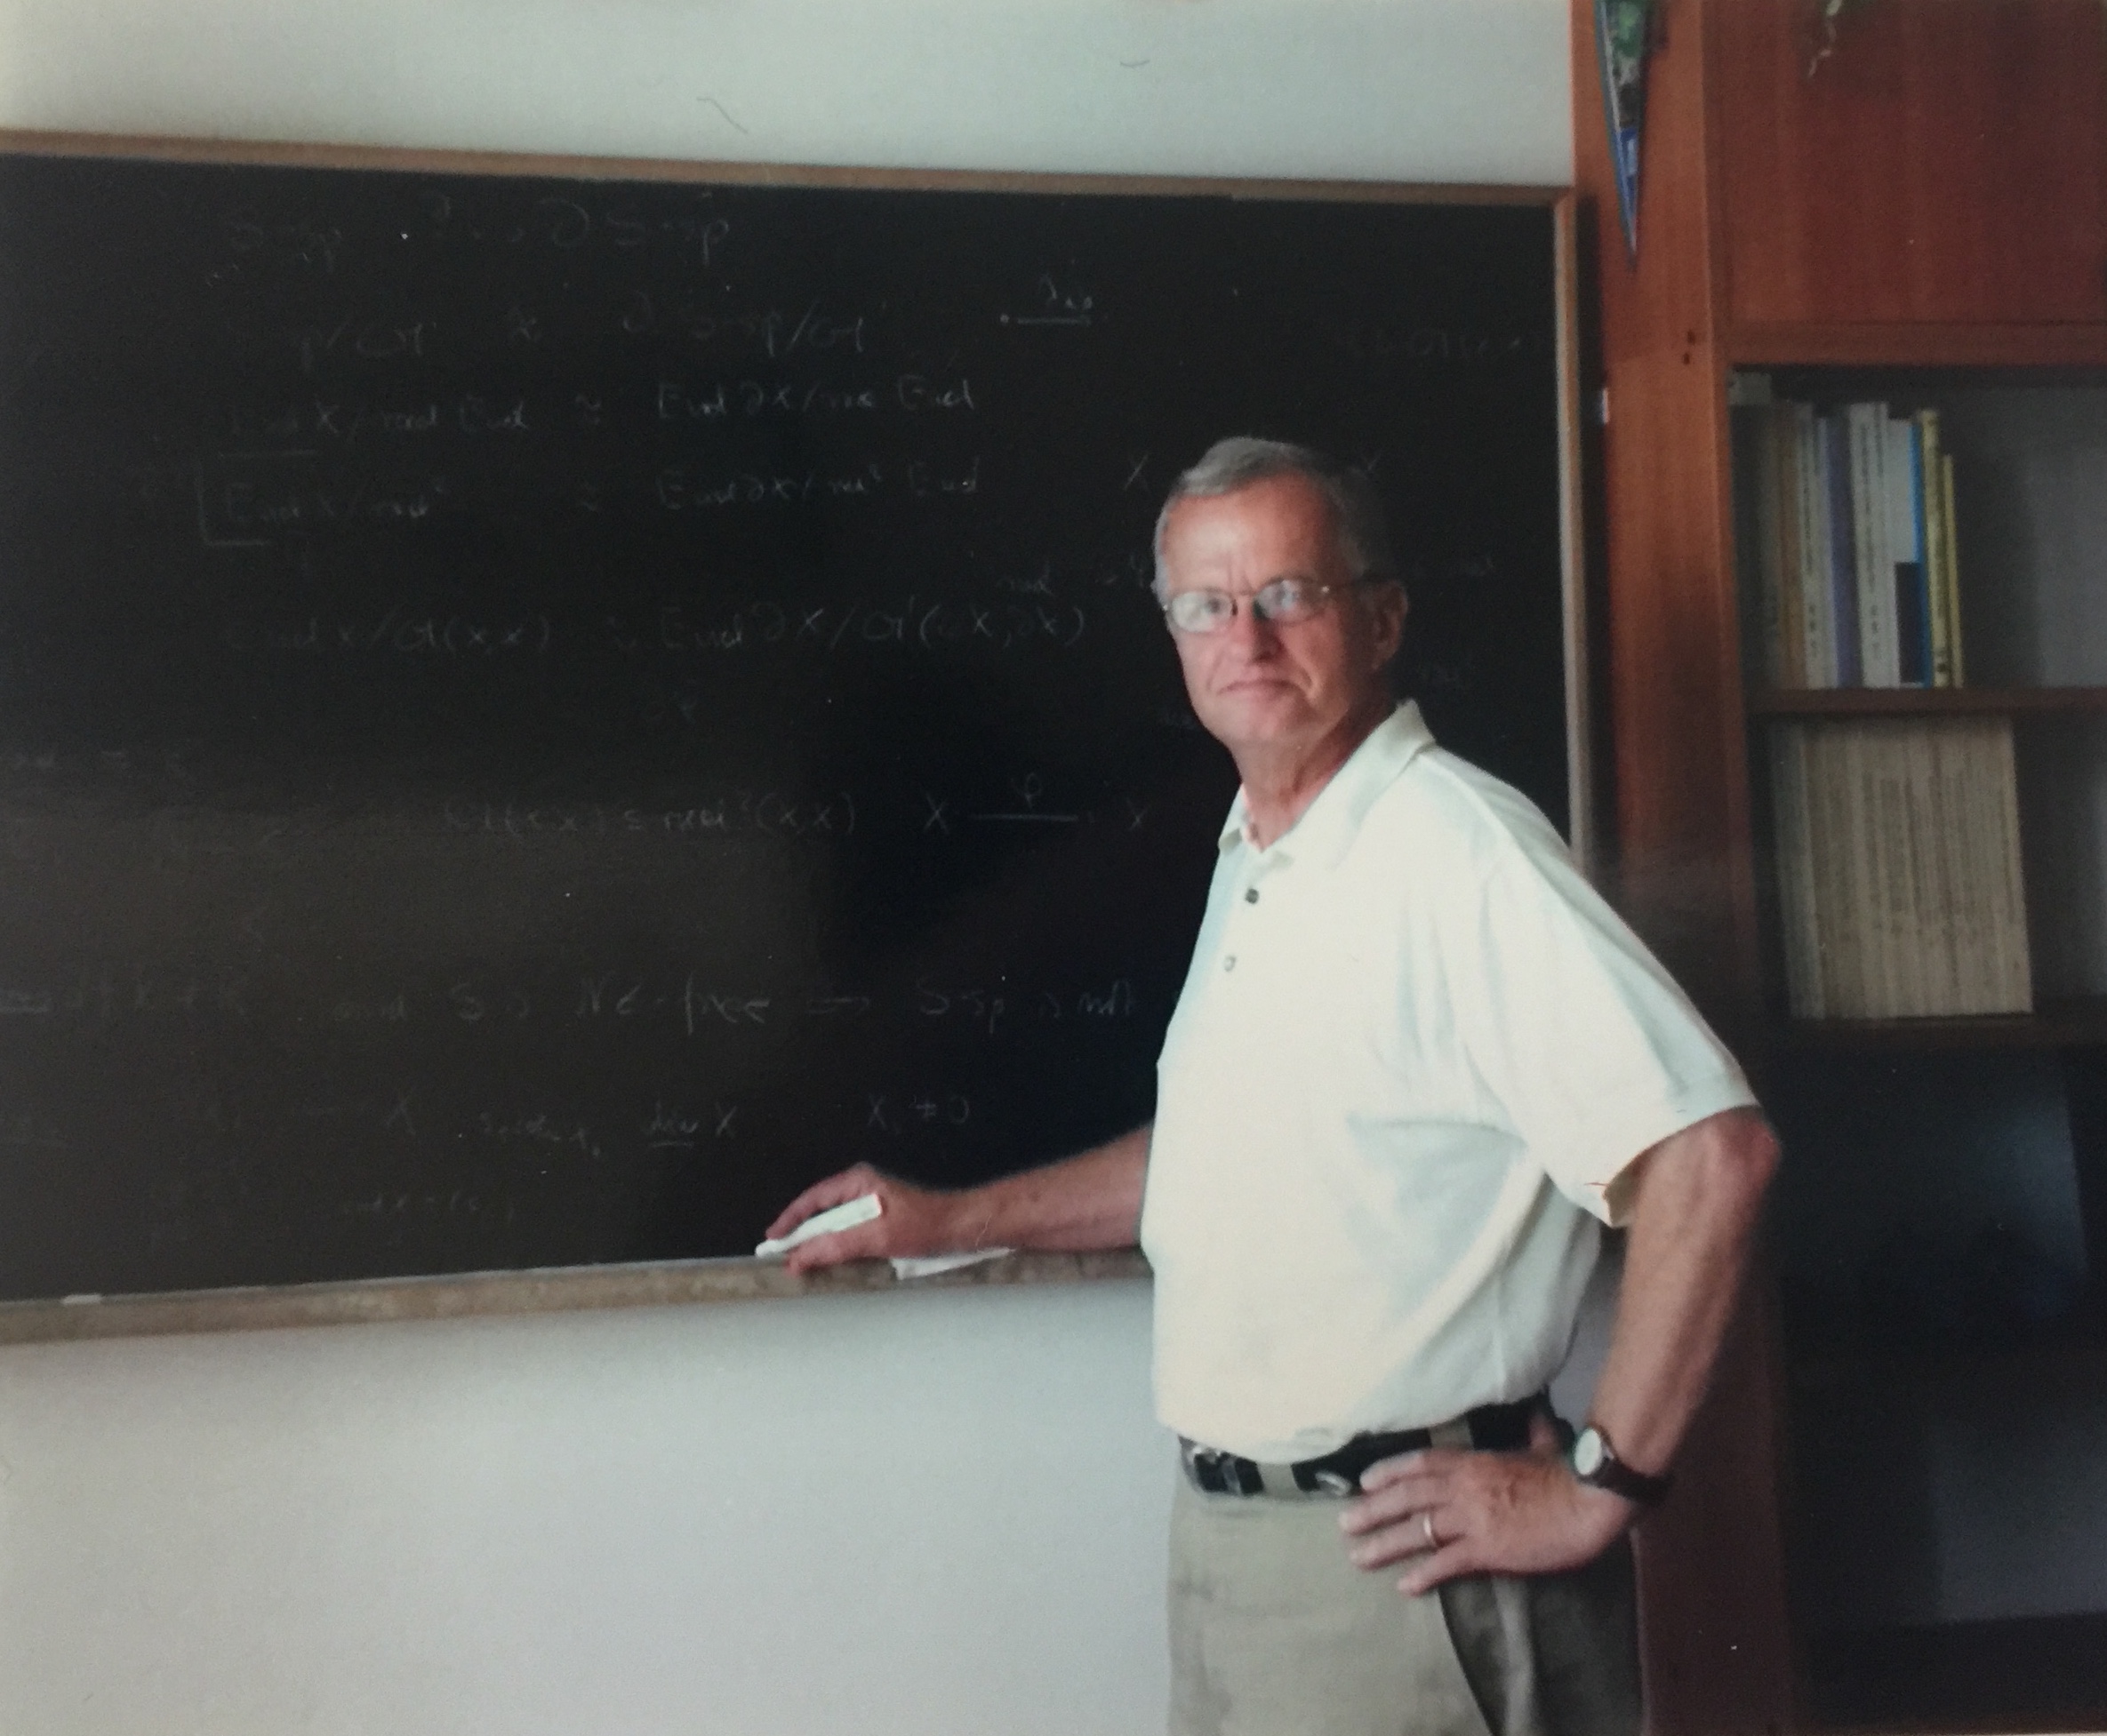 David Arnold standing at chalkboard